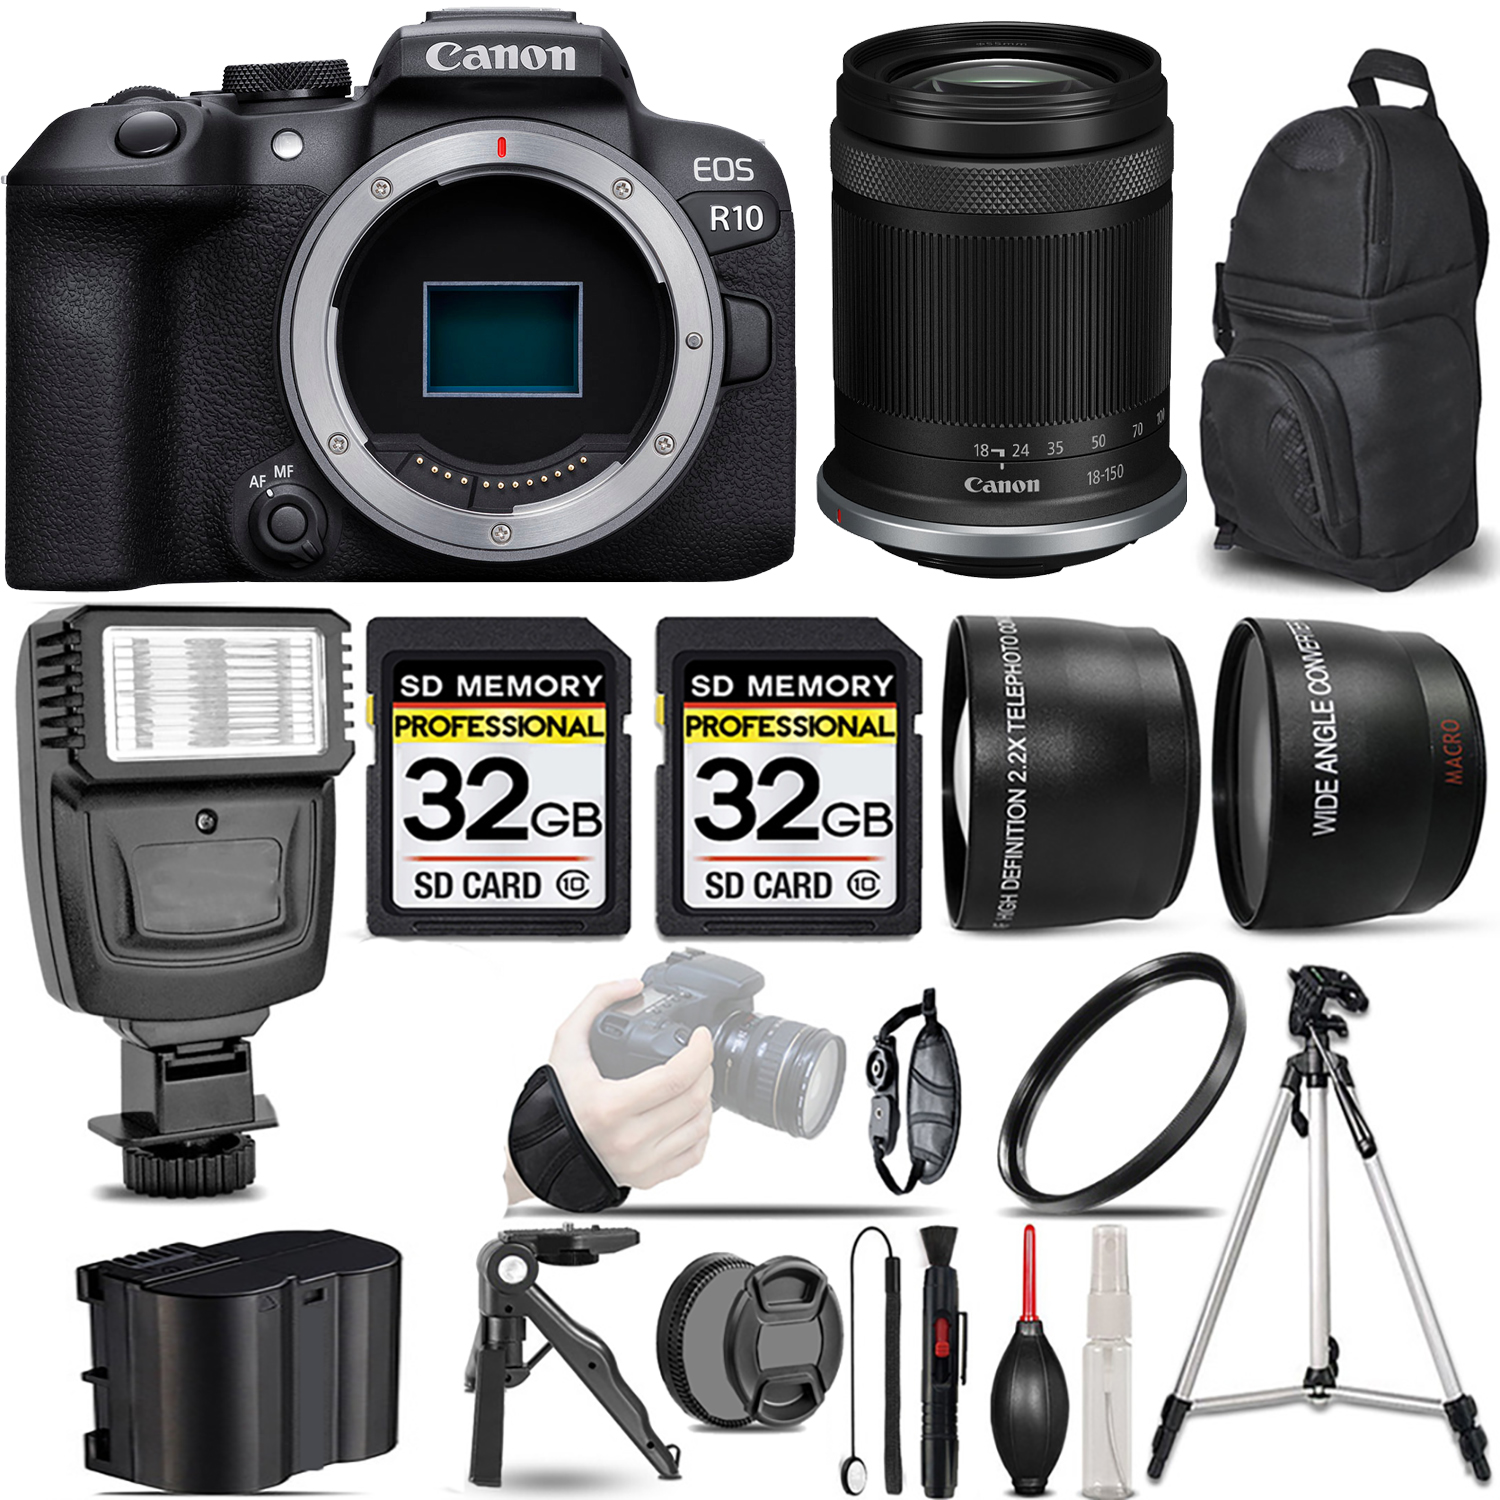 EOS R10 Camera + 18-150mm Lens + Flash + 64GB - Mega Kit *FREE SHIPPING*